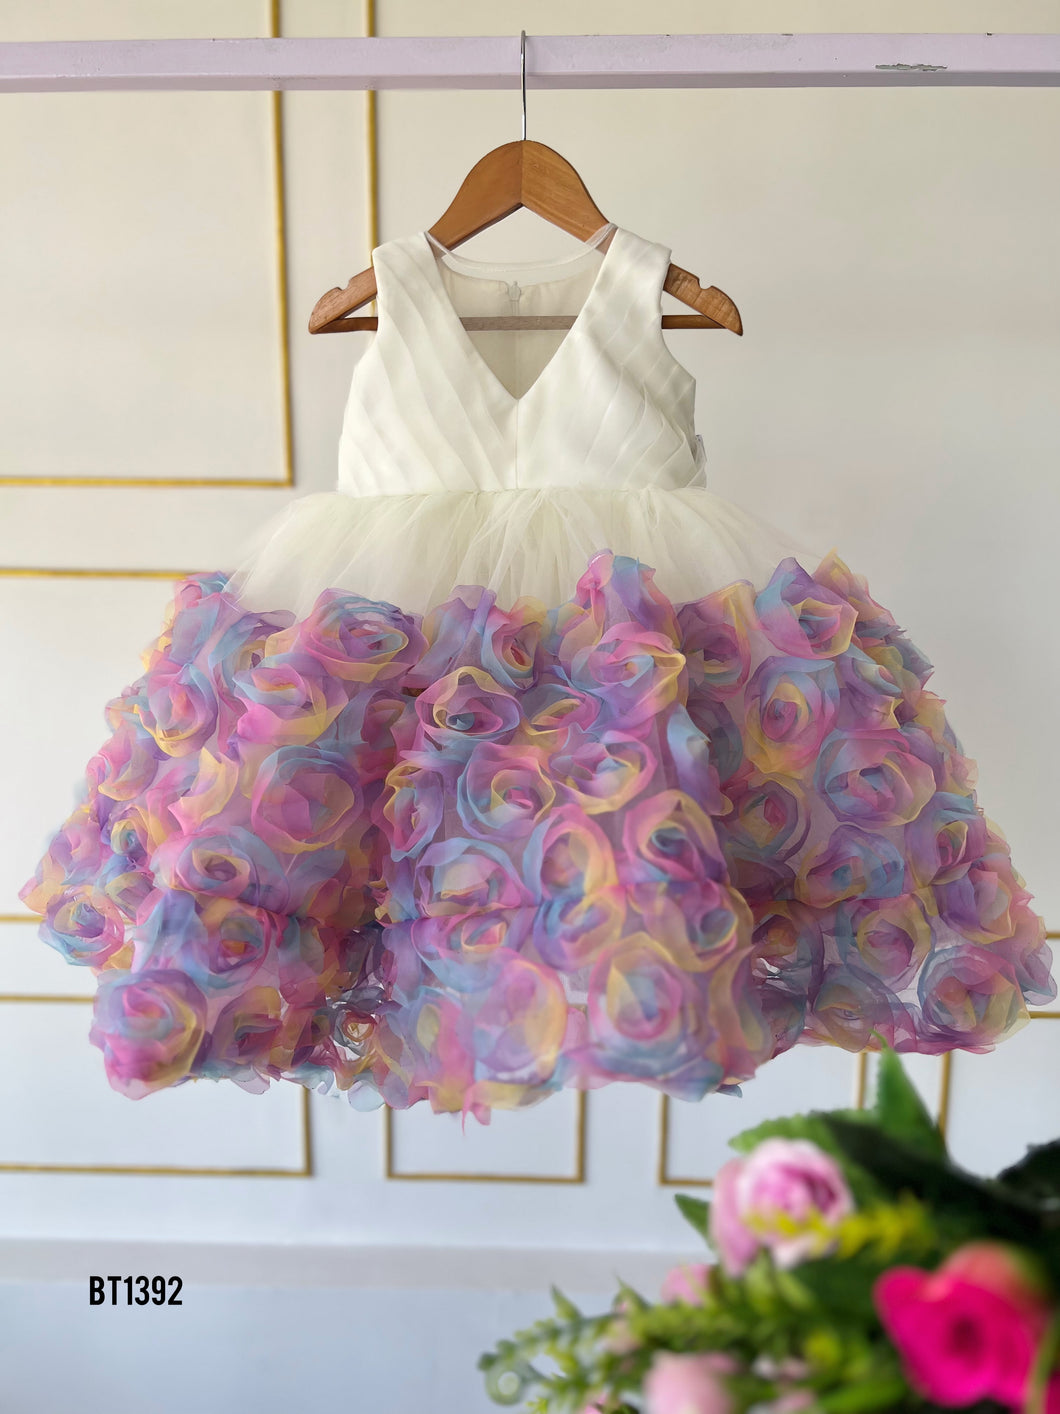 BT1392 Enchanted Garden Princess Dress - A Fairytale in Every Stitch